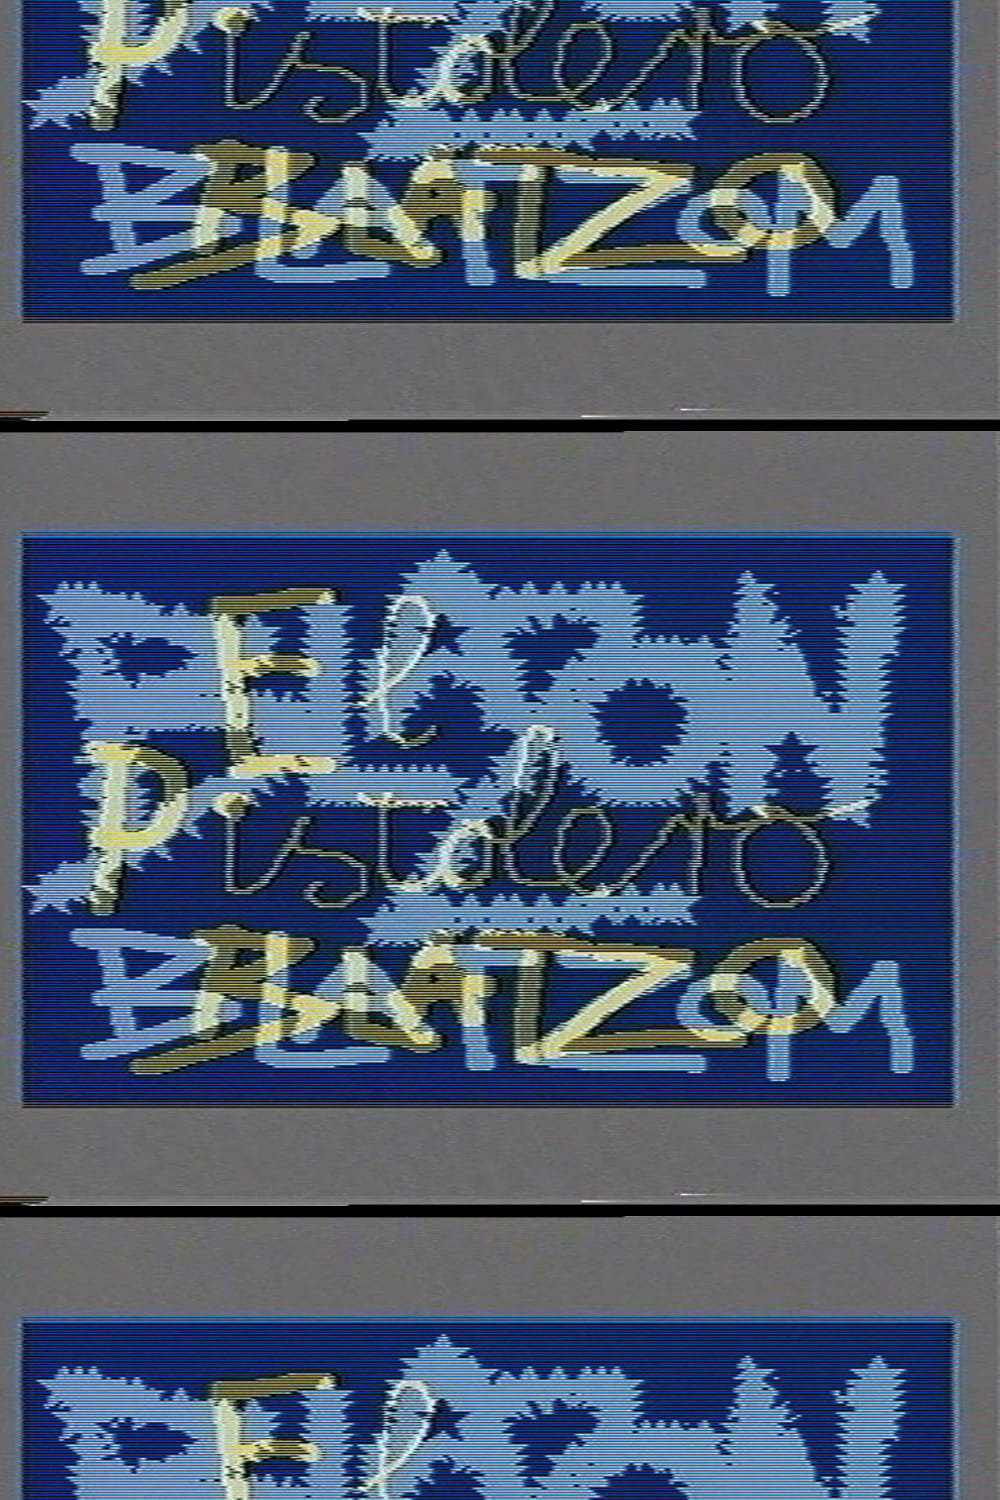 Blazon Blatzom: El Pistolera Blatzo